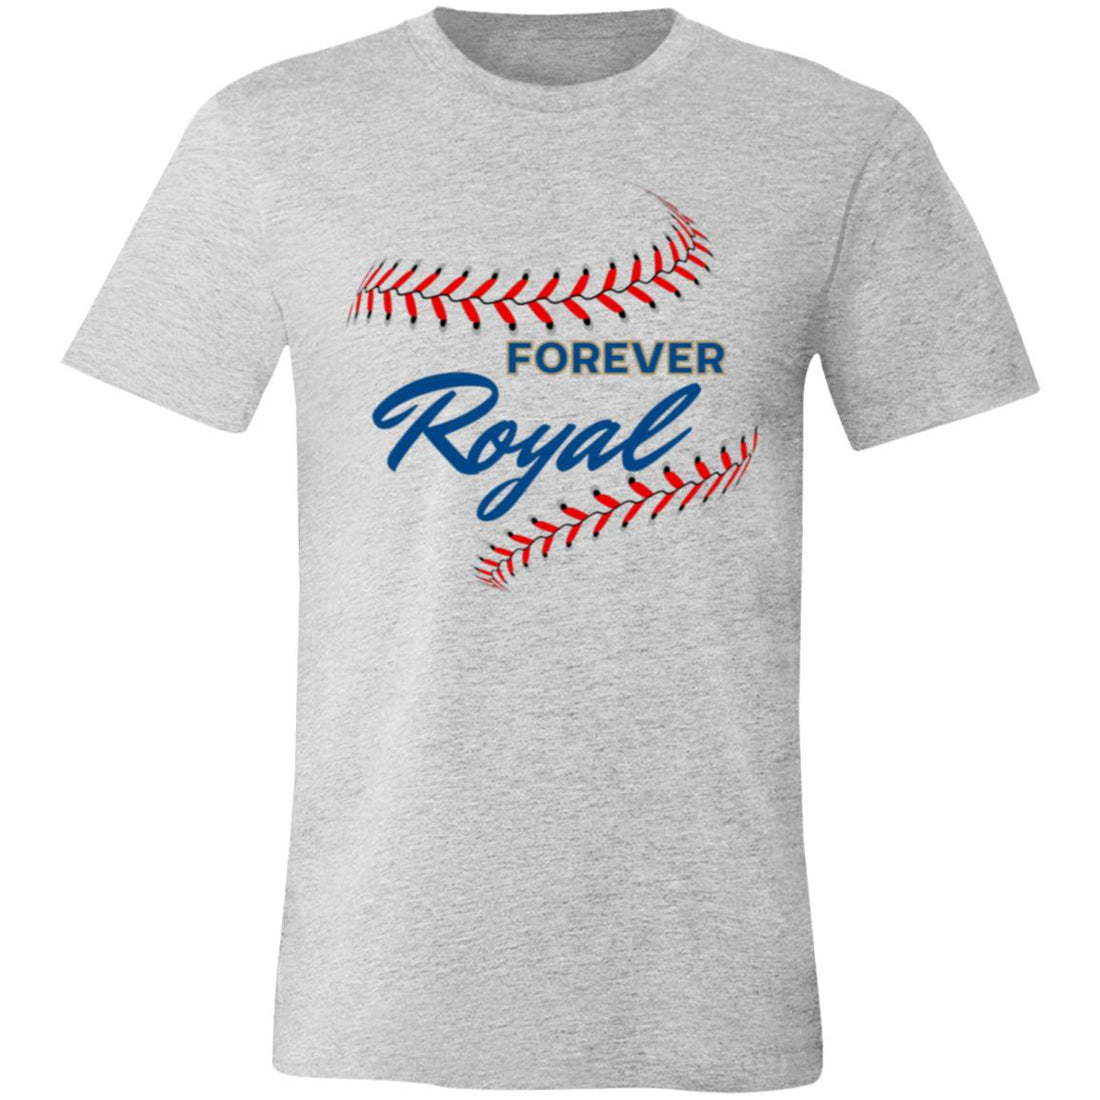 Forever Royal Short-Sleeve T-Shirt - T-Shirts - Positively Sassy - Forever Royal Short-Sleeve T-Shirt